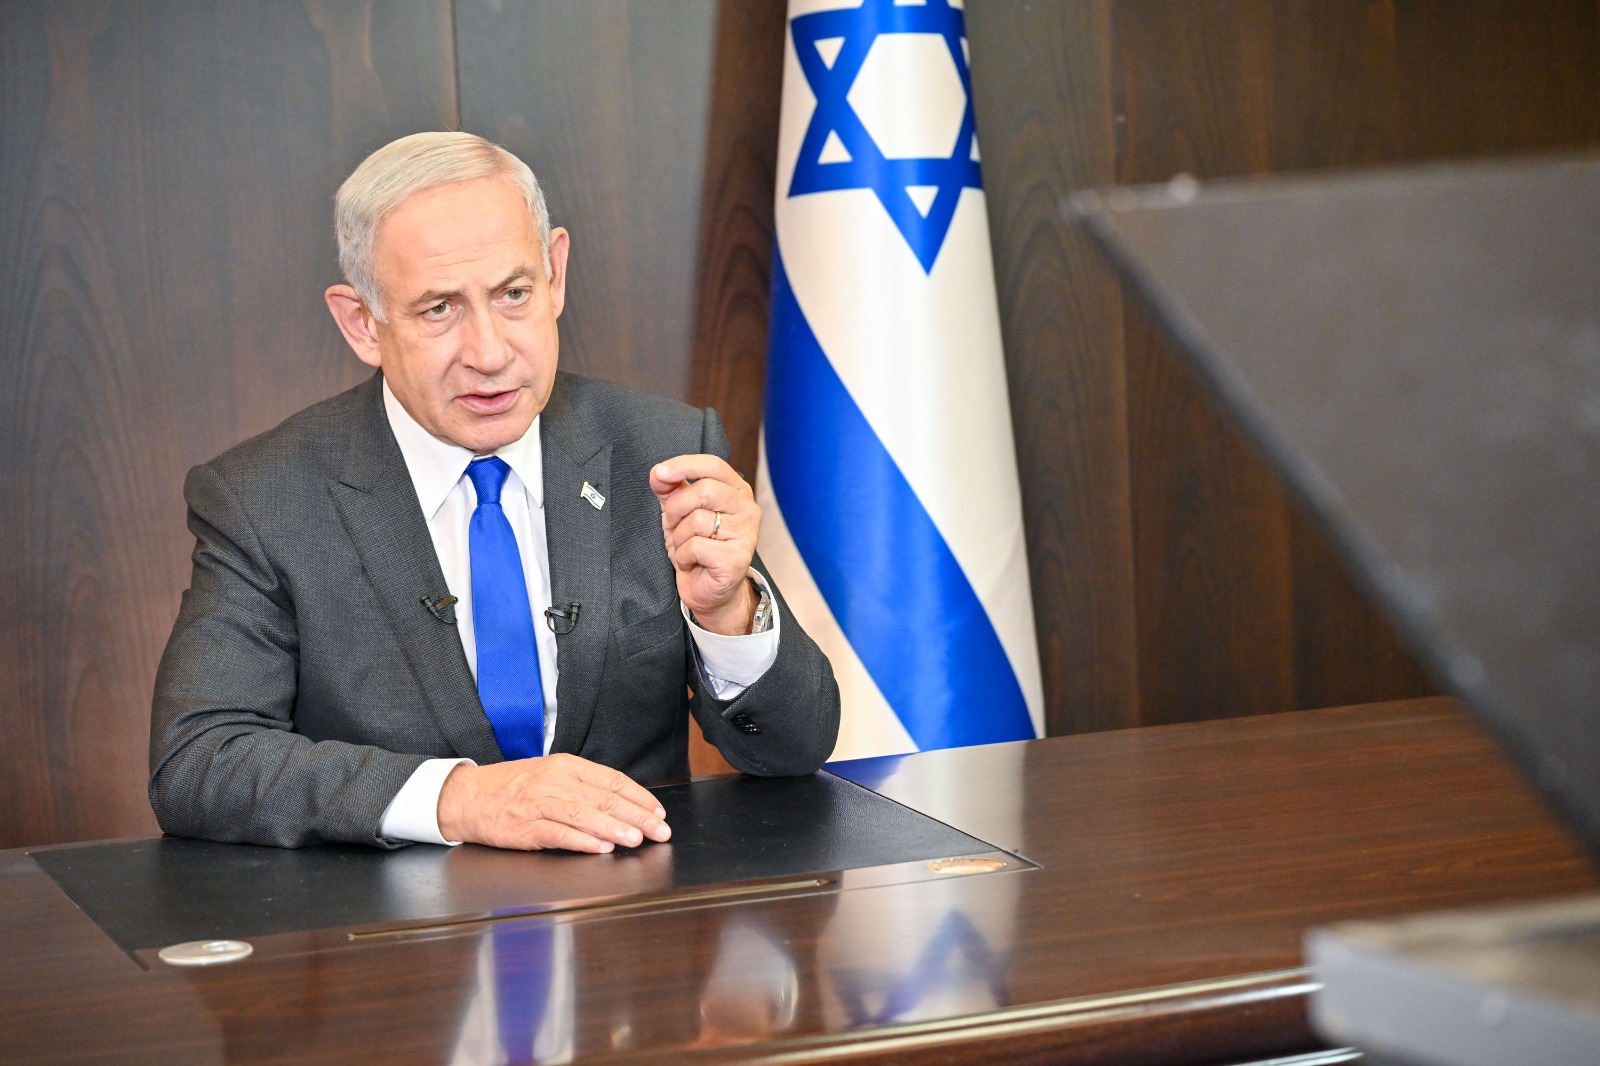  El séquito de Netanyahu culpa a Estados Unidos por financiar mítines de reforma judicial: informe